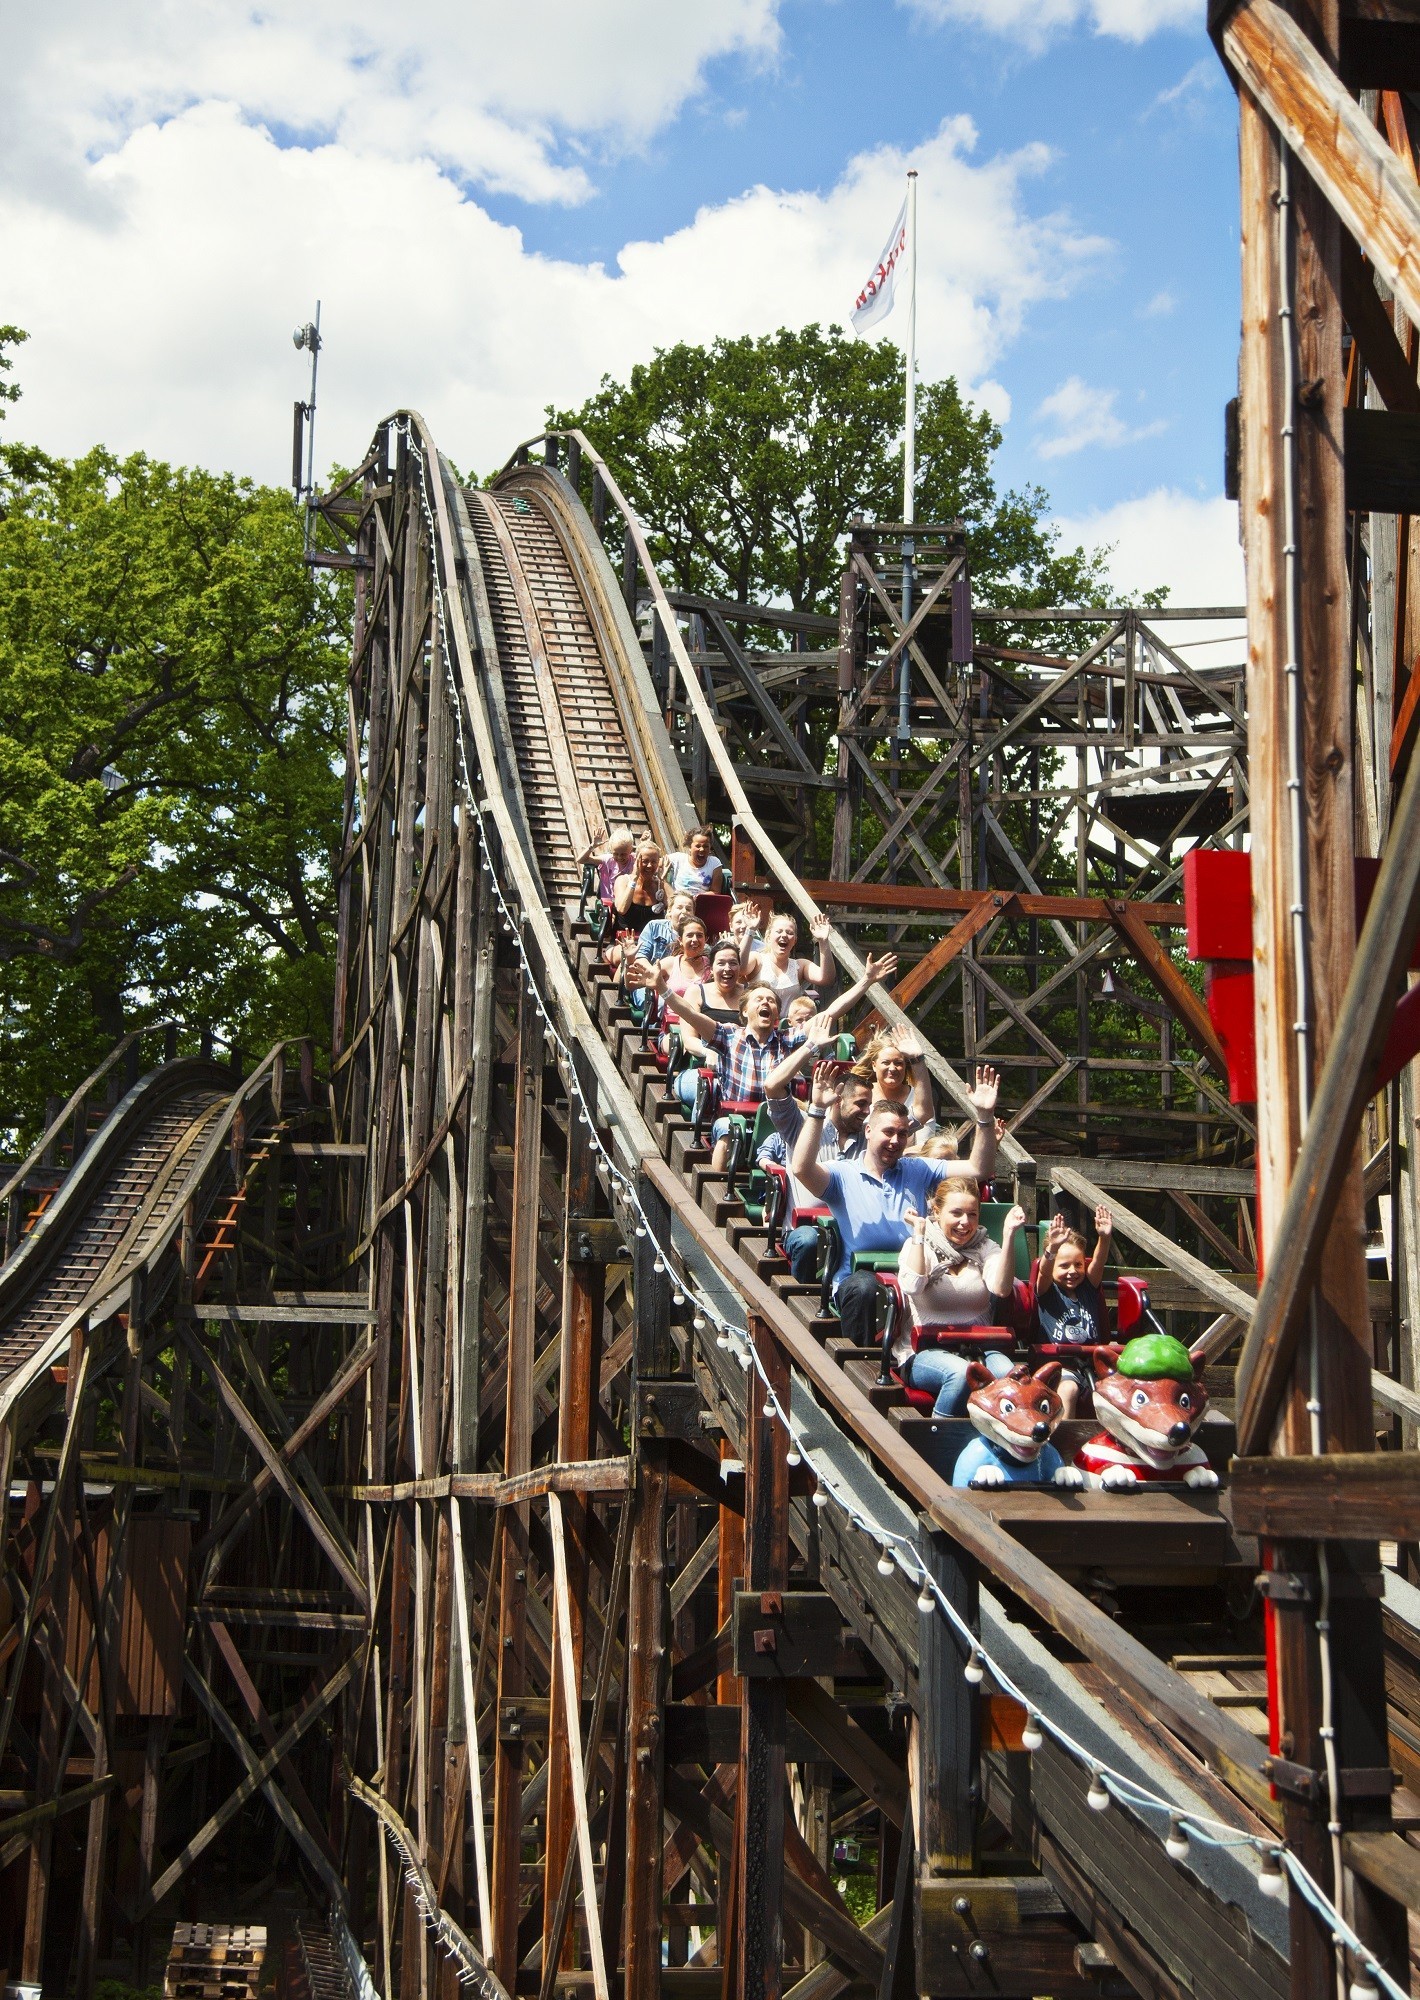 Bakken: The World's Oldest Amusement Park | World Heritage of Europe